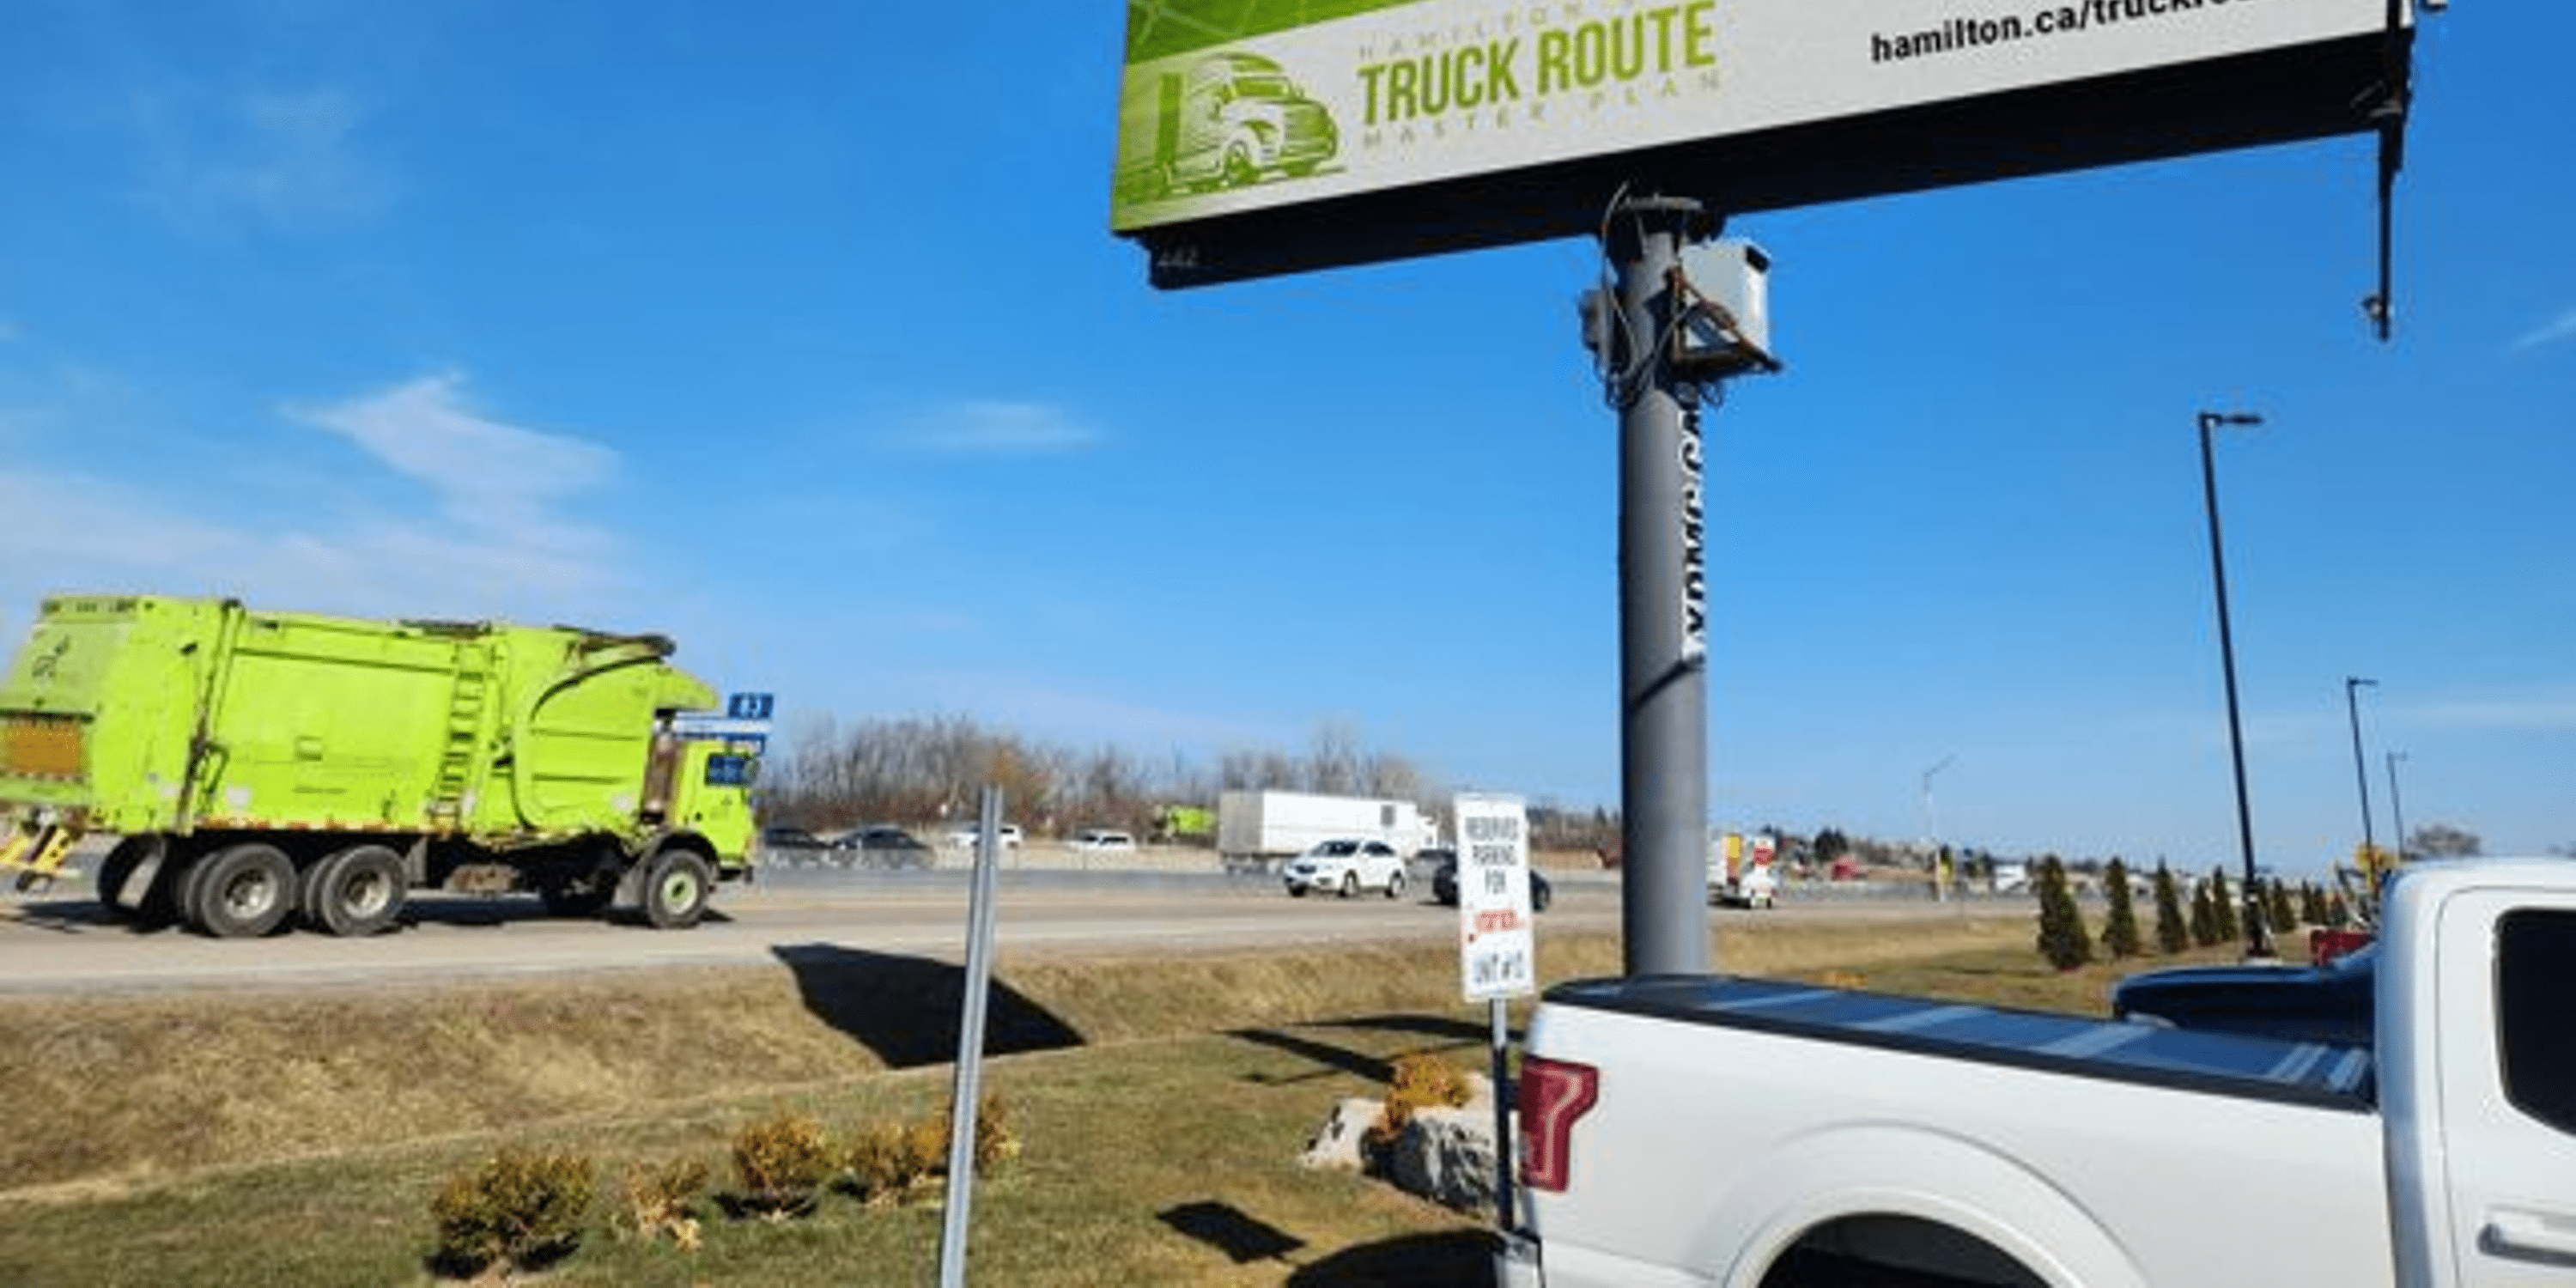 city of hamilton ontario transport delivery truck routes billboard qew